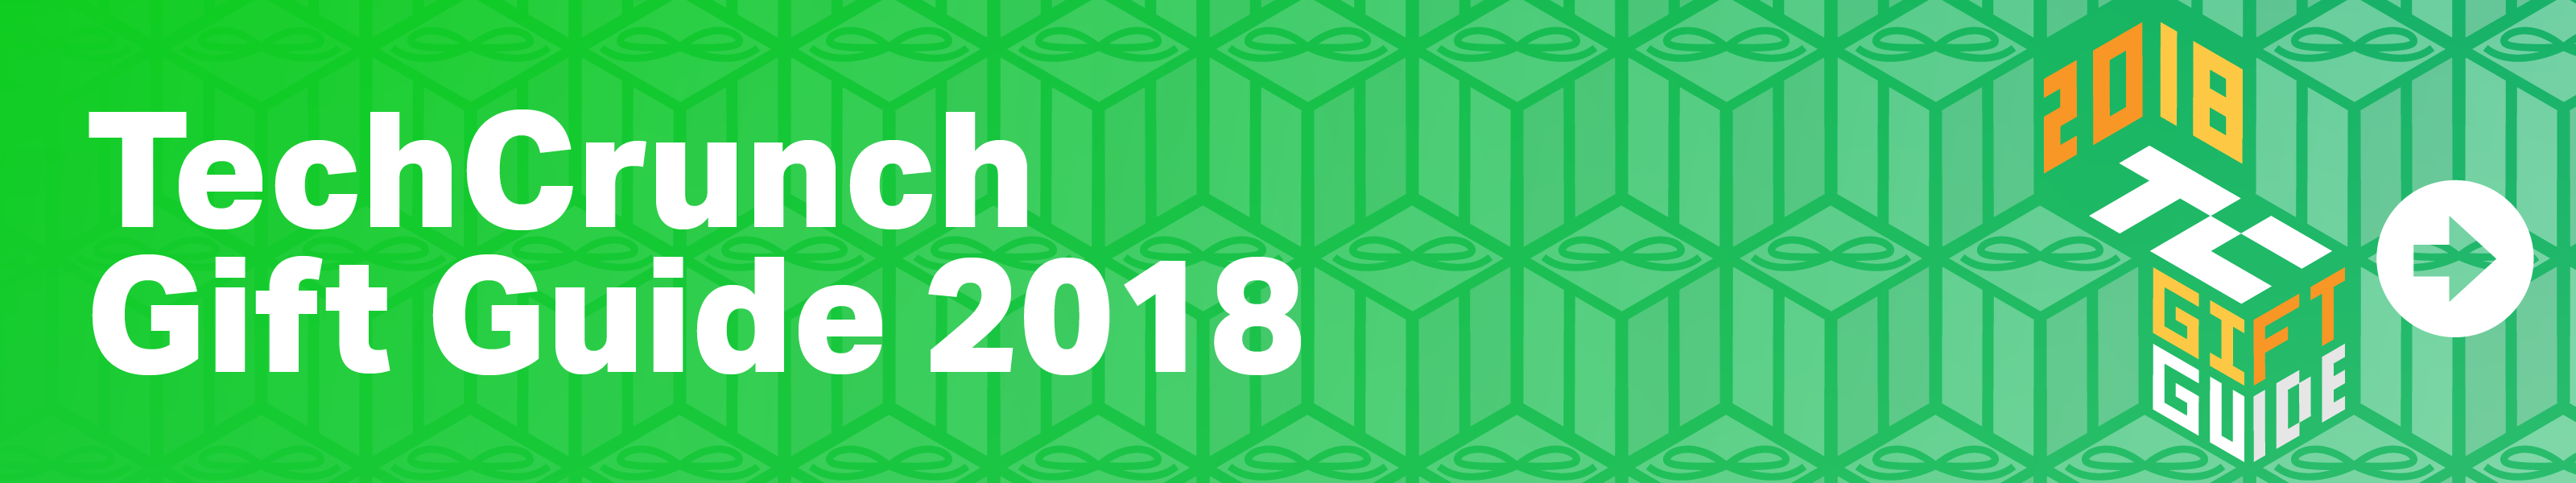 TechCrunch Gift Guide 2018 banner